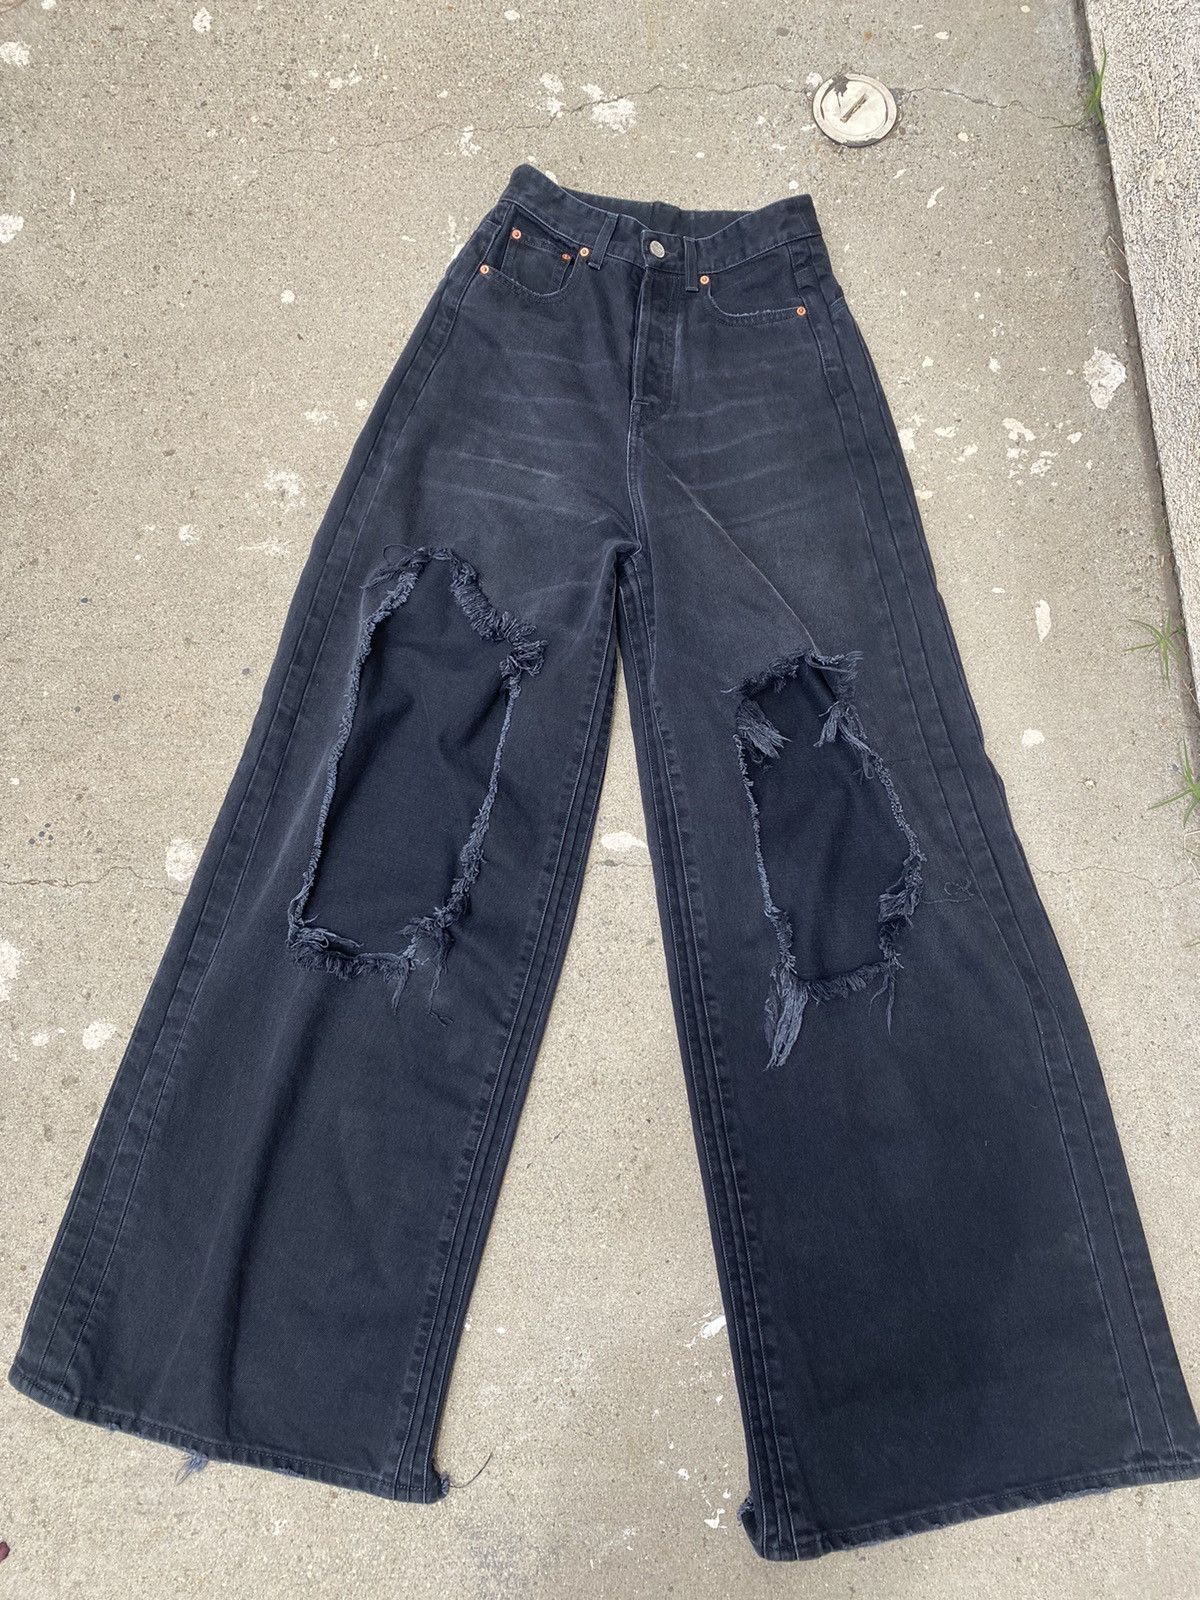 Vetements Vetements AW22 Big Shape Destroyed Jeans Black | Grailed